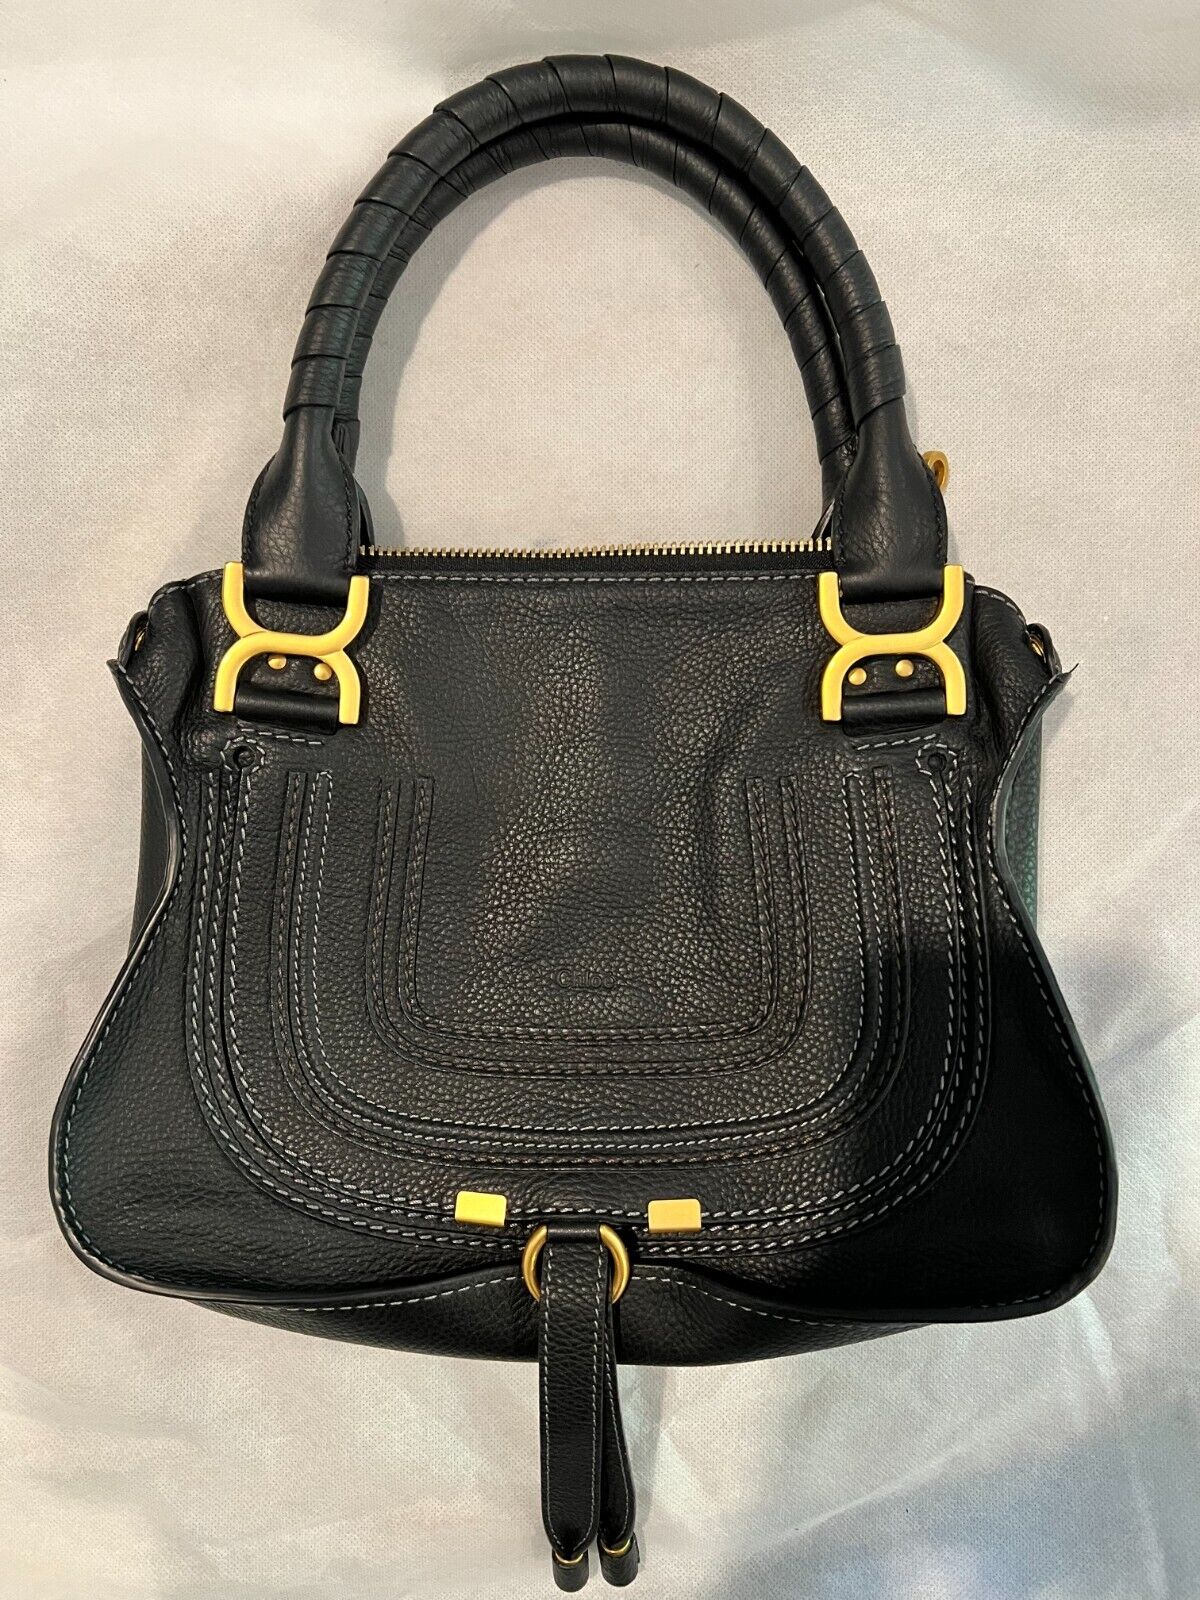 AUTH Chloe Leather Medium Marcie Handbag in black, really good condition